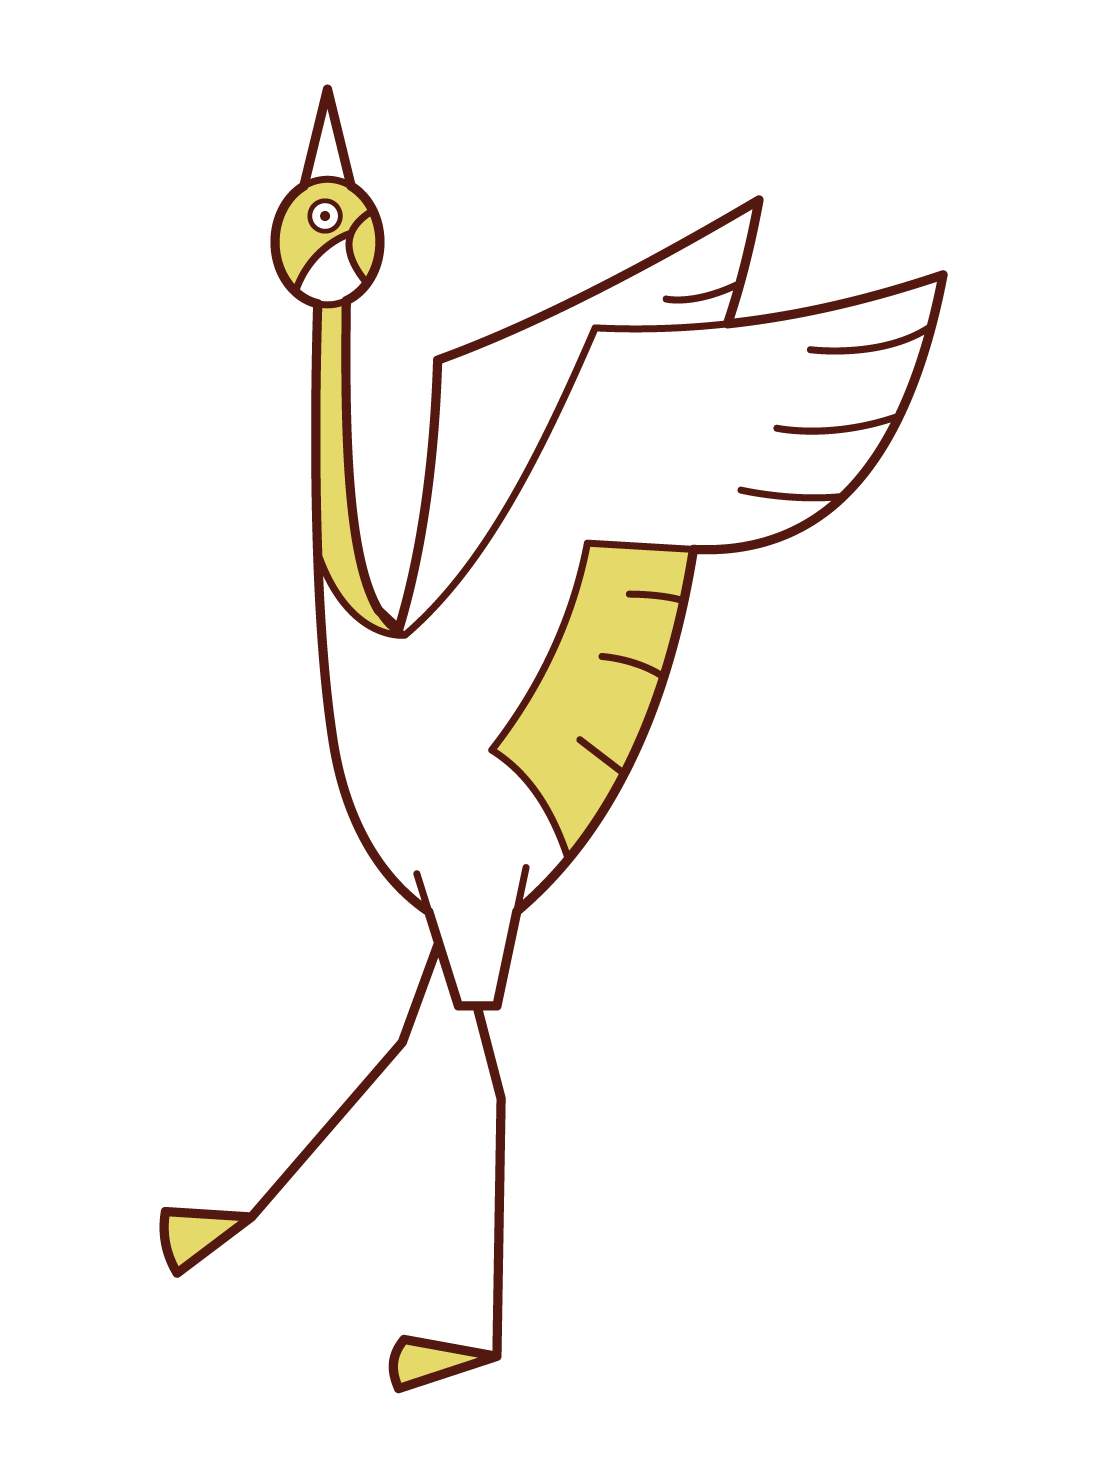 Illustration of a crane